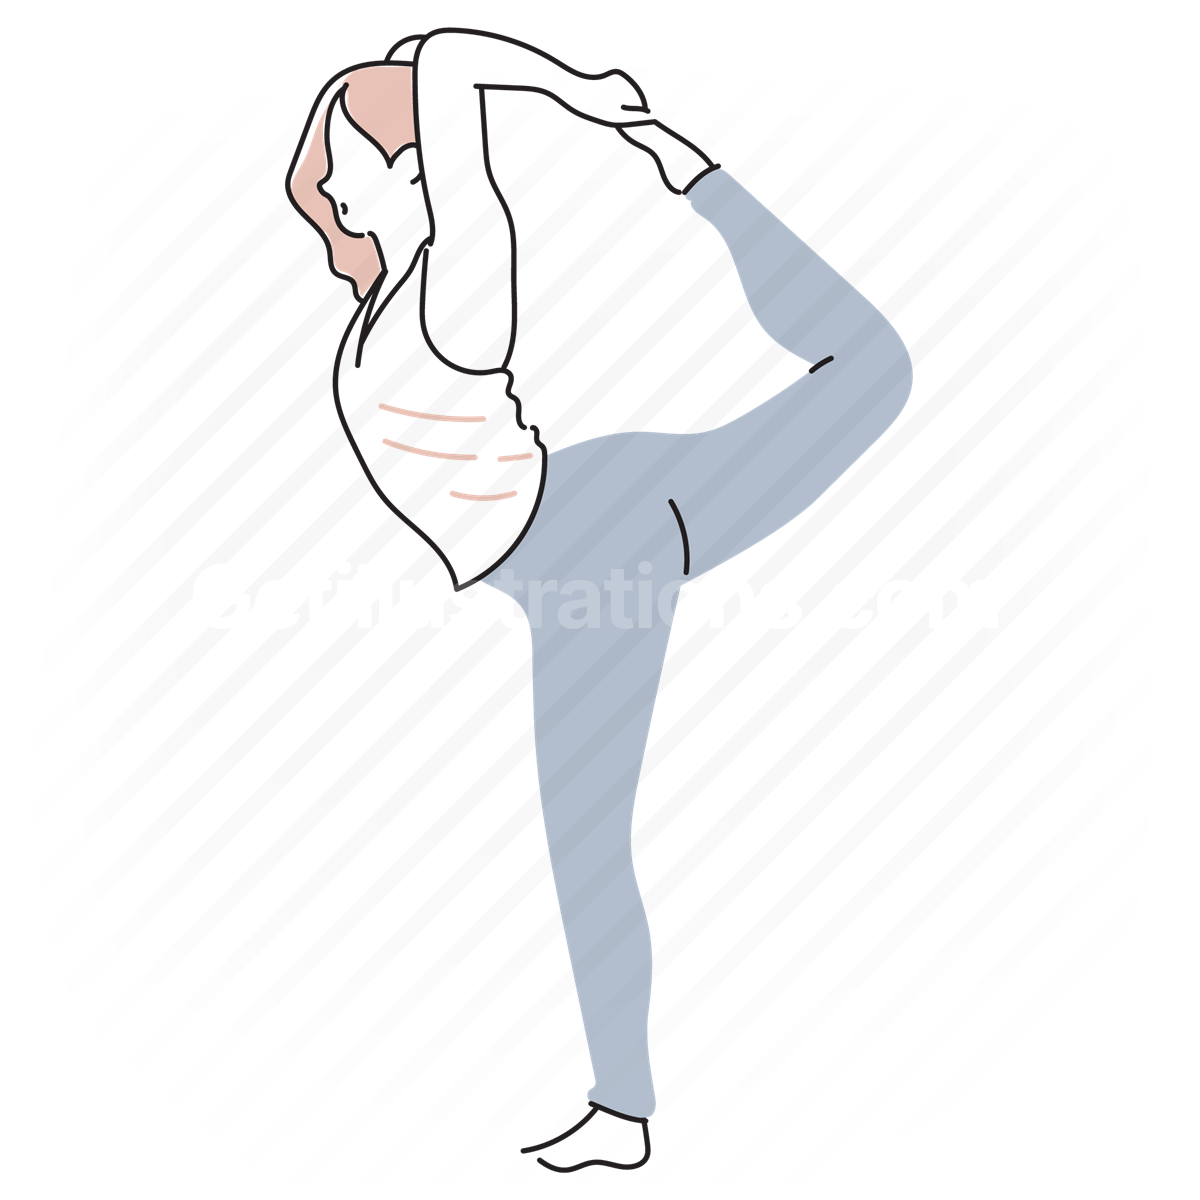 How to get into Shiva pose | Yoga poses advanced, Advanced yoga, Basic yoga  poses